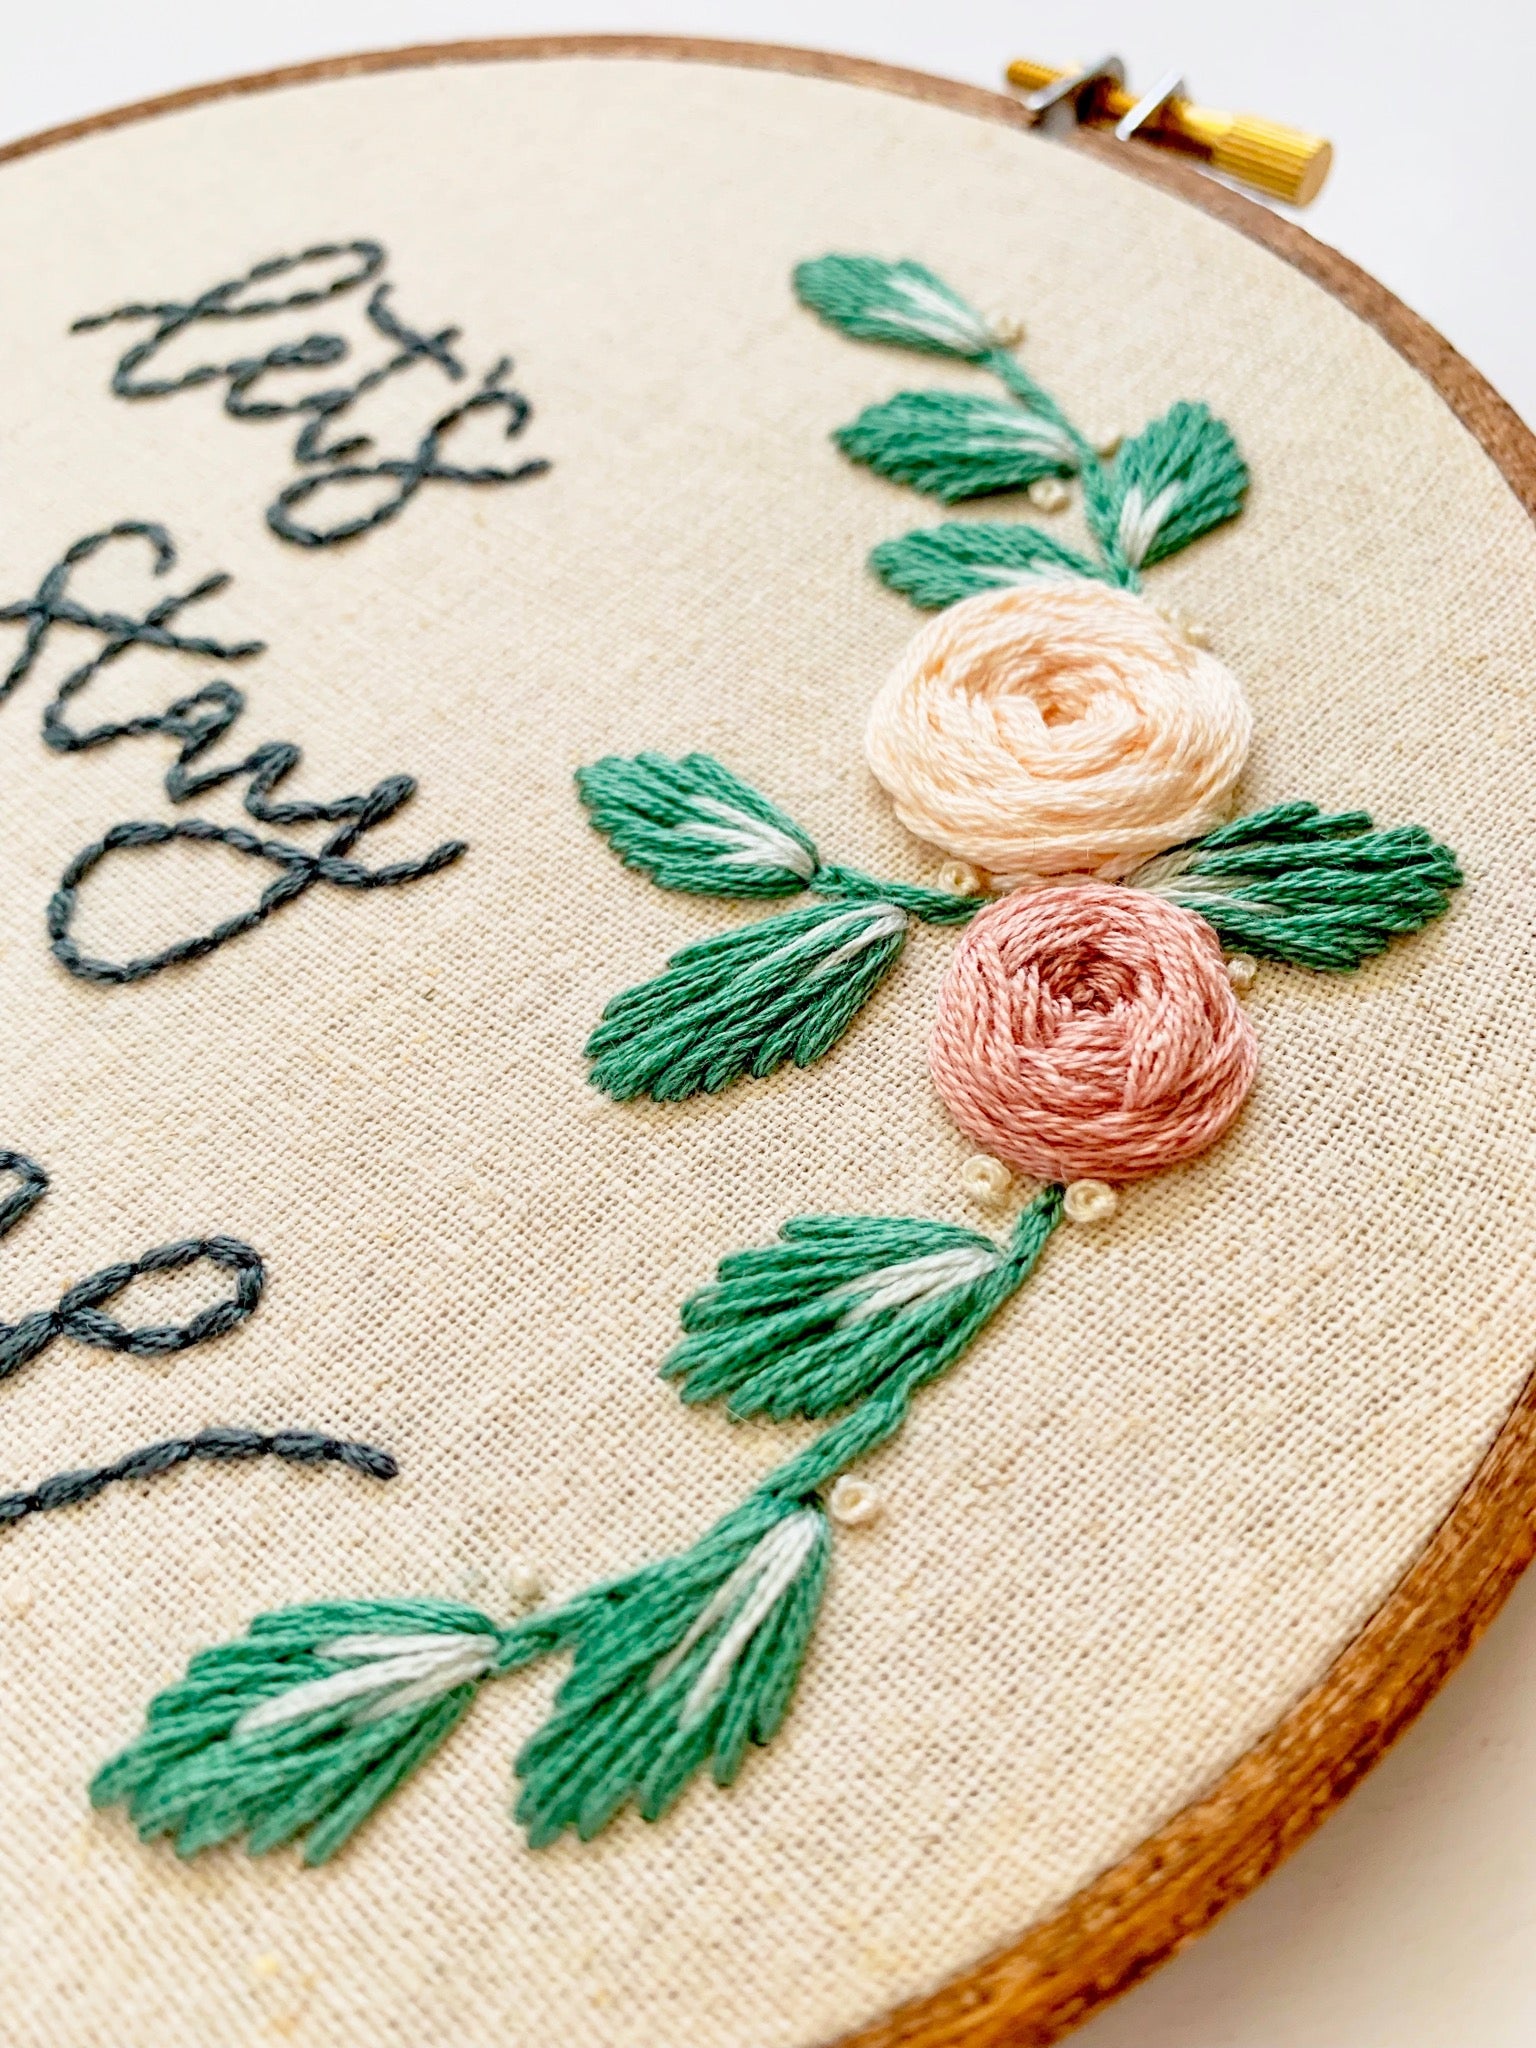 Fresh, Fun, and Easy Embroidery Hoop Art